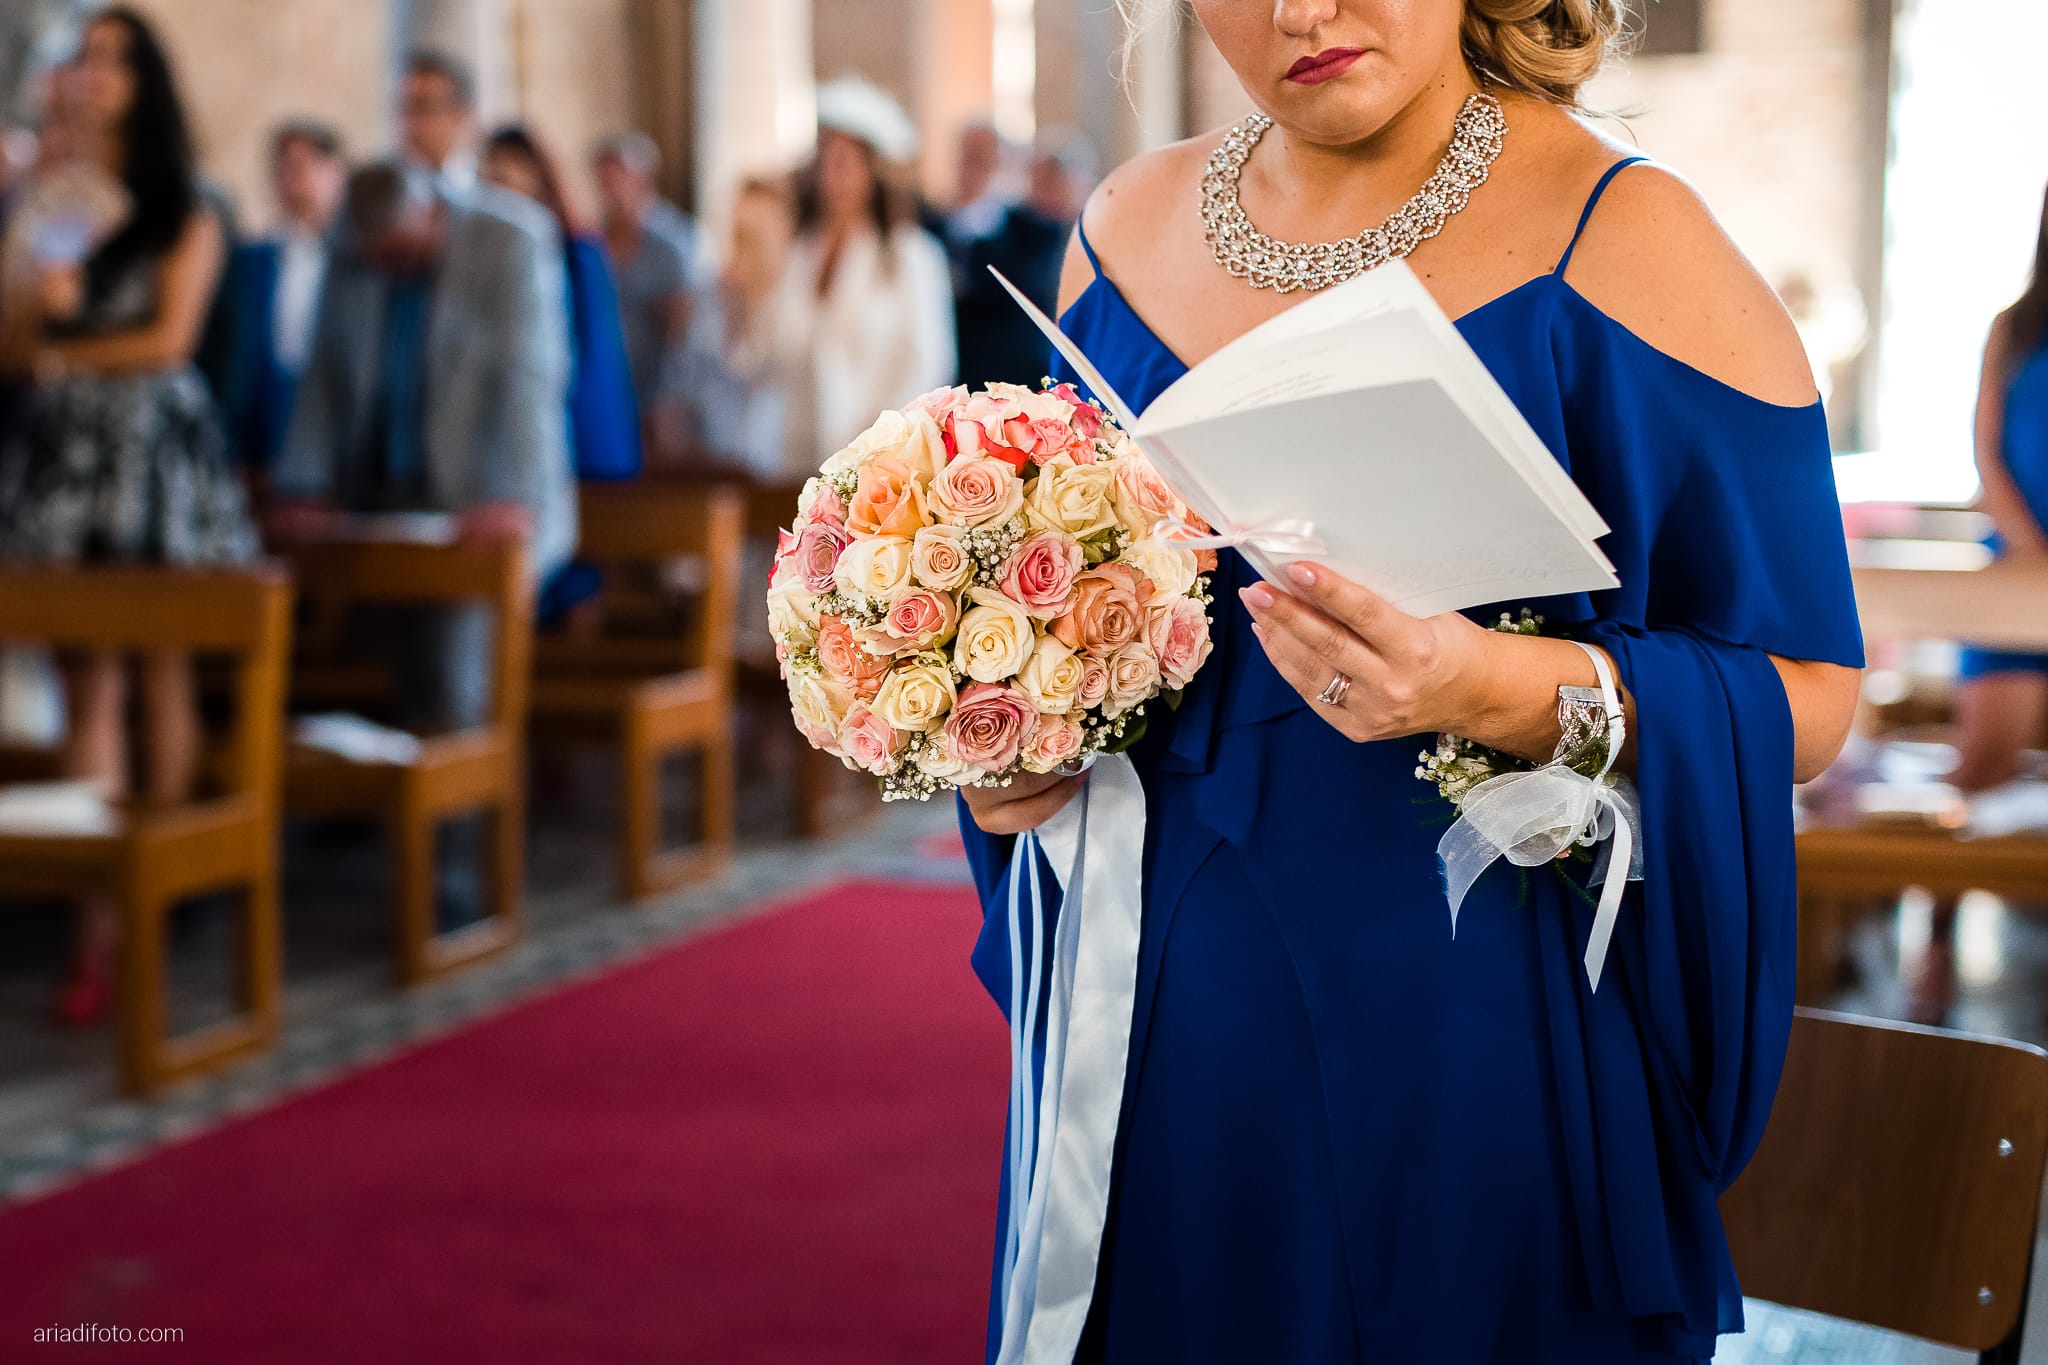 Samantha Daniele Matrimonio Elegante Villa Elodia Udine cerimonia dettagli bouquet libretto messa